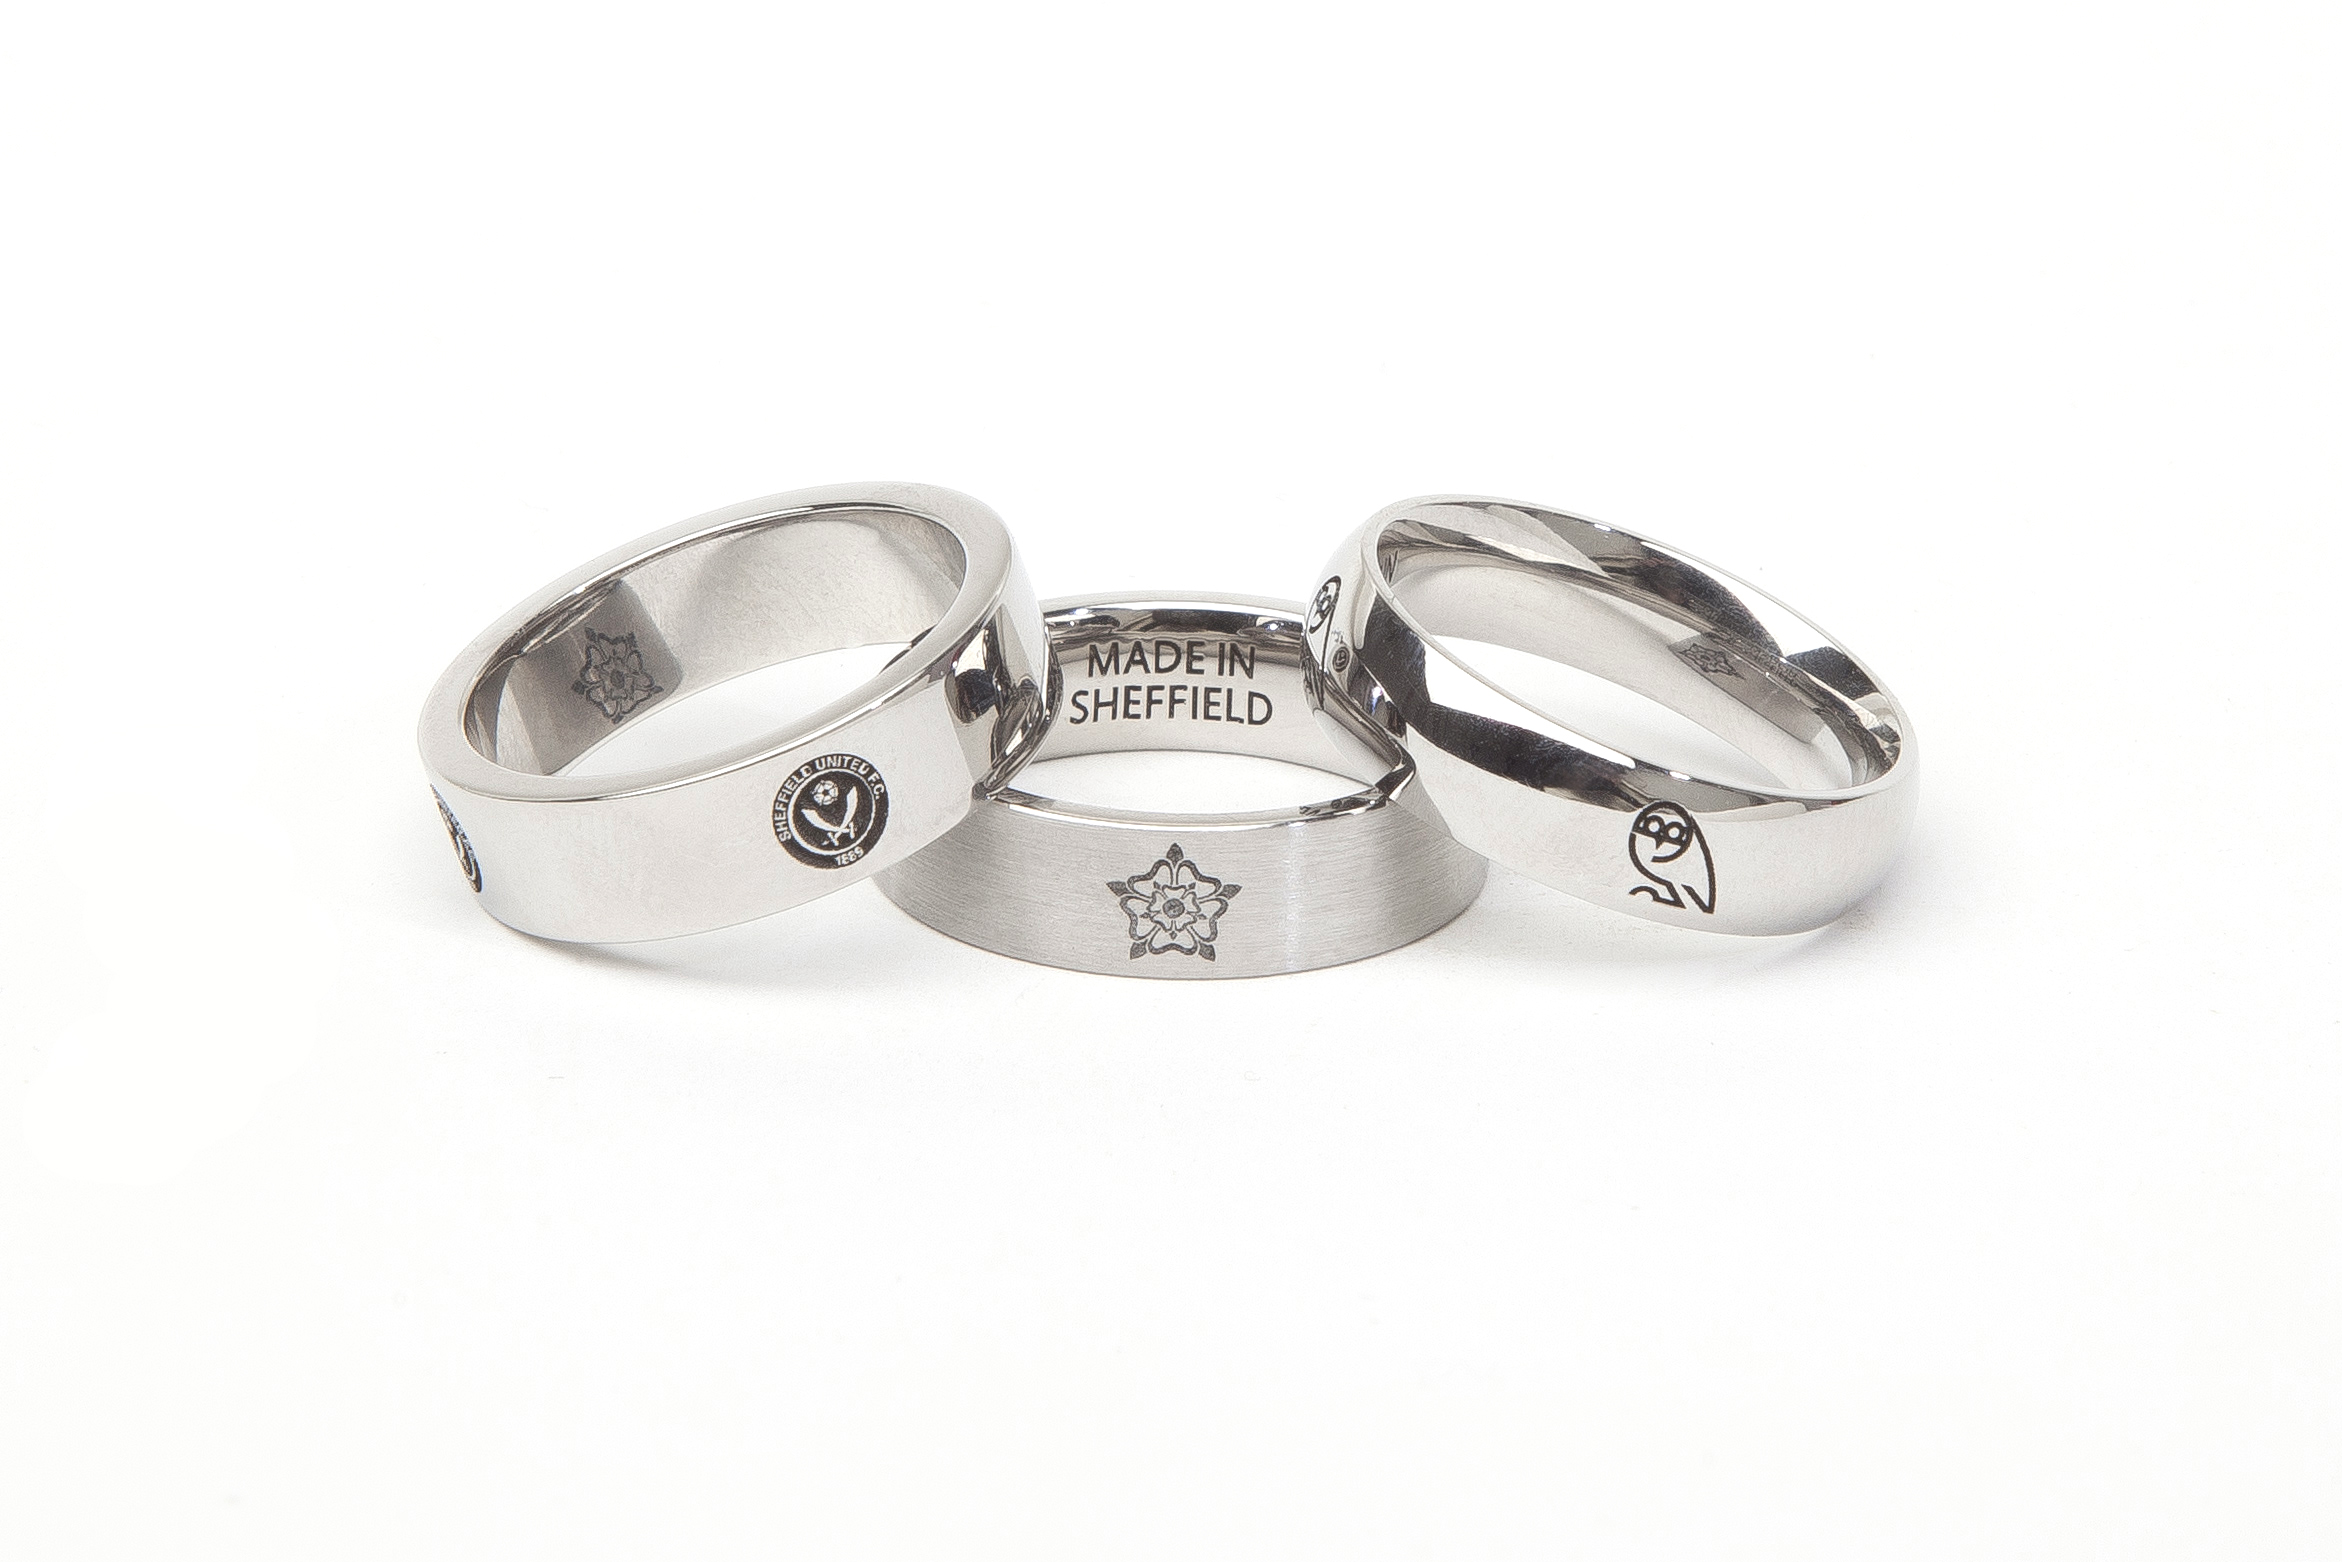 TIAGO Jewellery |Sheffield Jewellers | Home of the Sheffield Steel Wedding Rings | 100% Guaranteed Sheffield Steel |Steel Ring | Steel Wedding Rings | Made in Sheffield